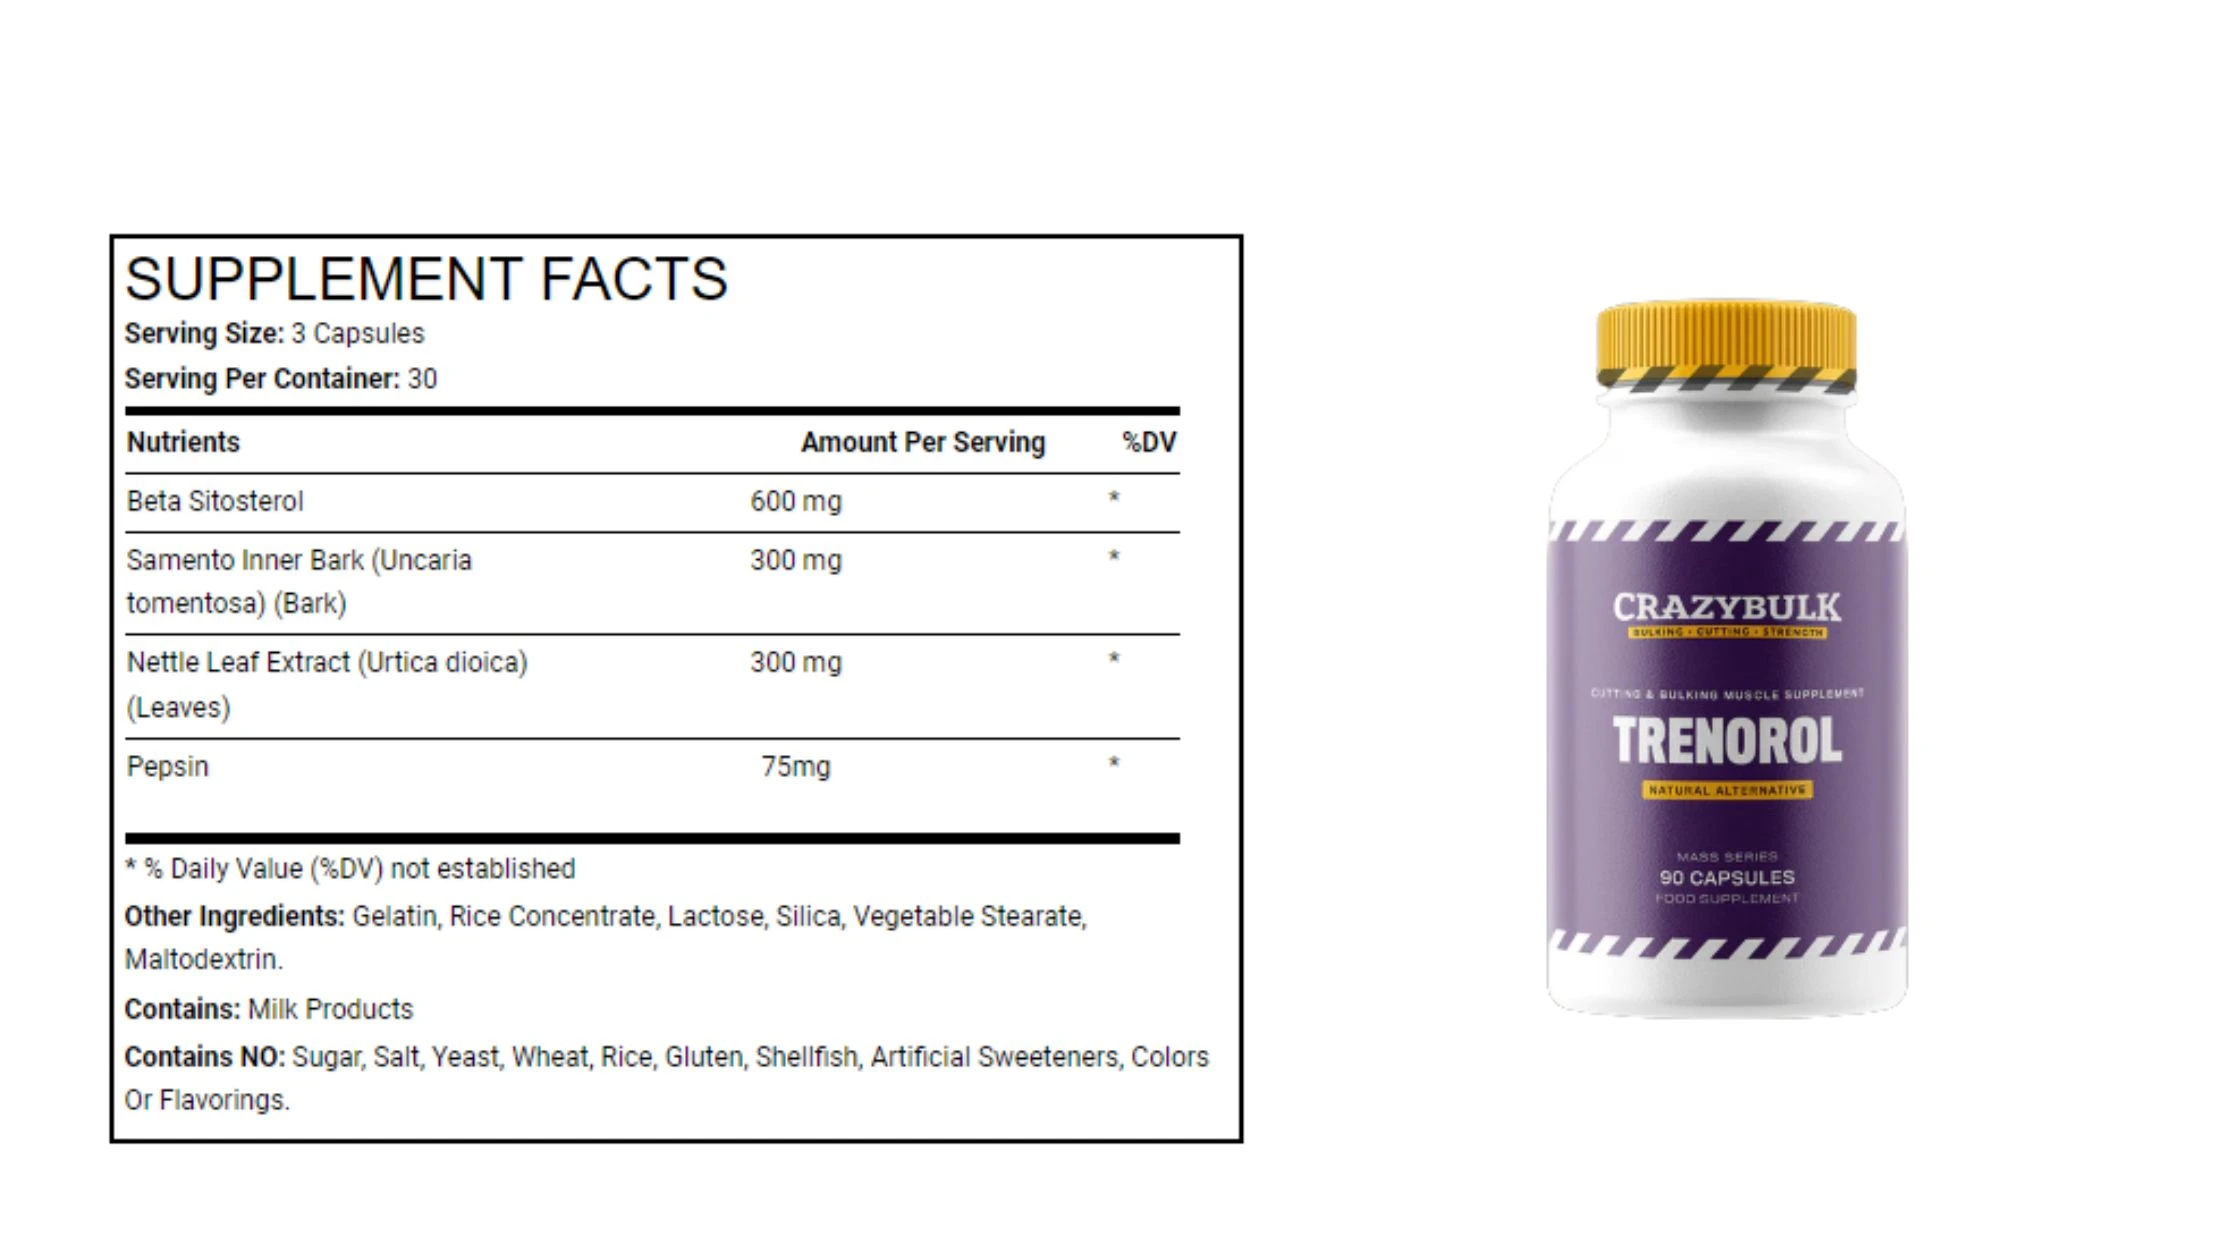 Trenorol supplement facts label